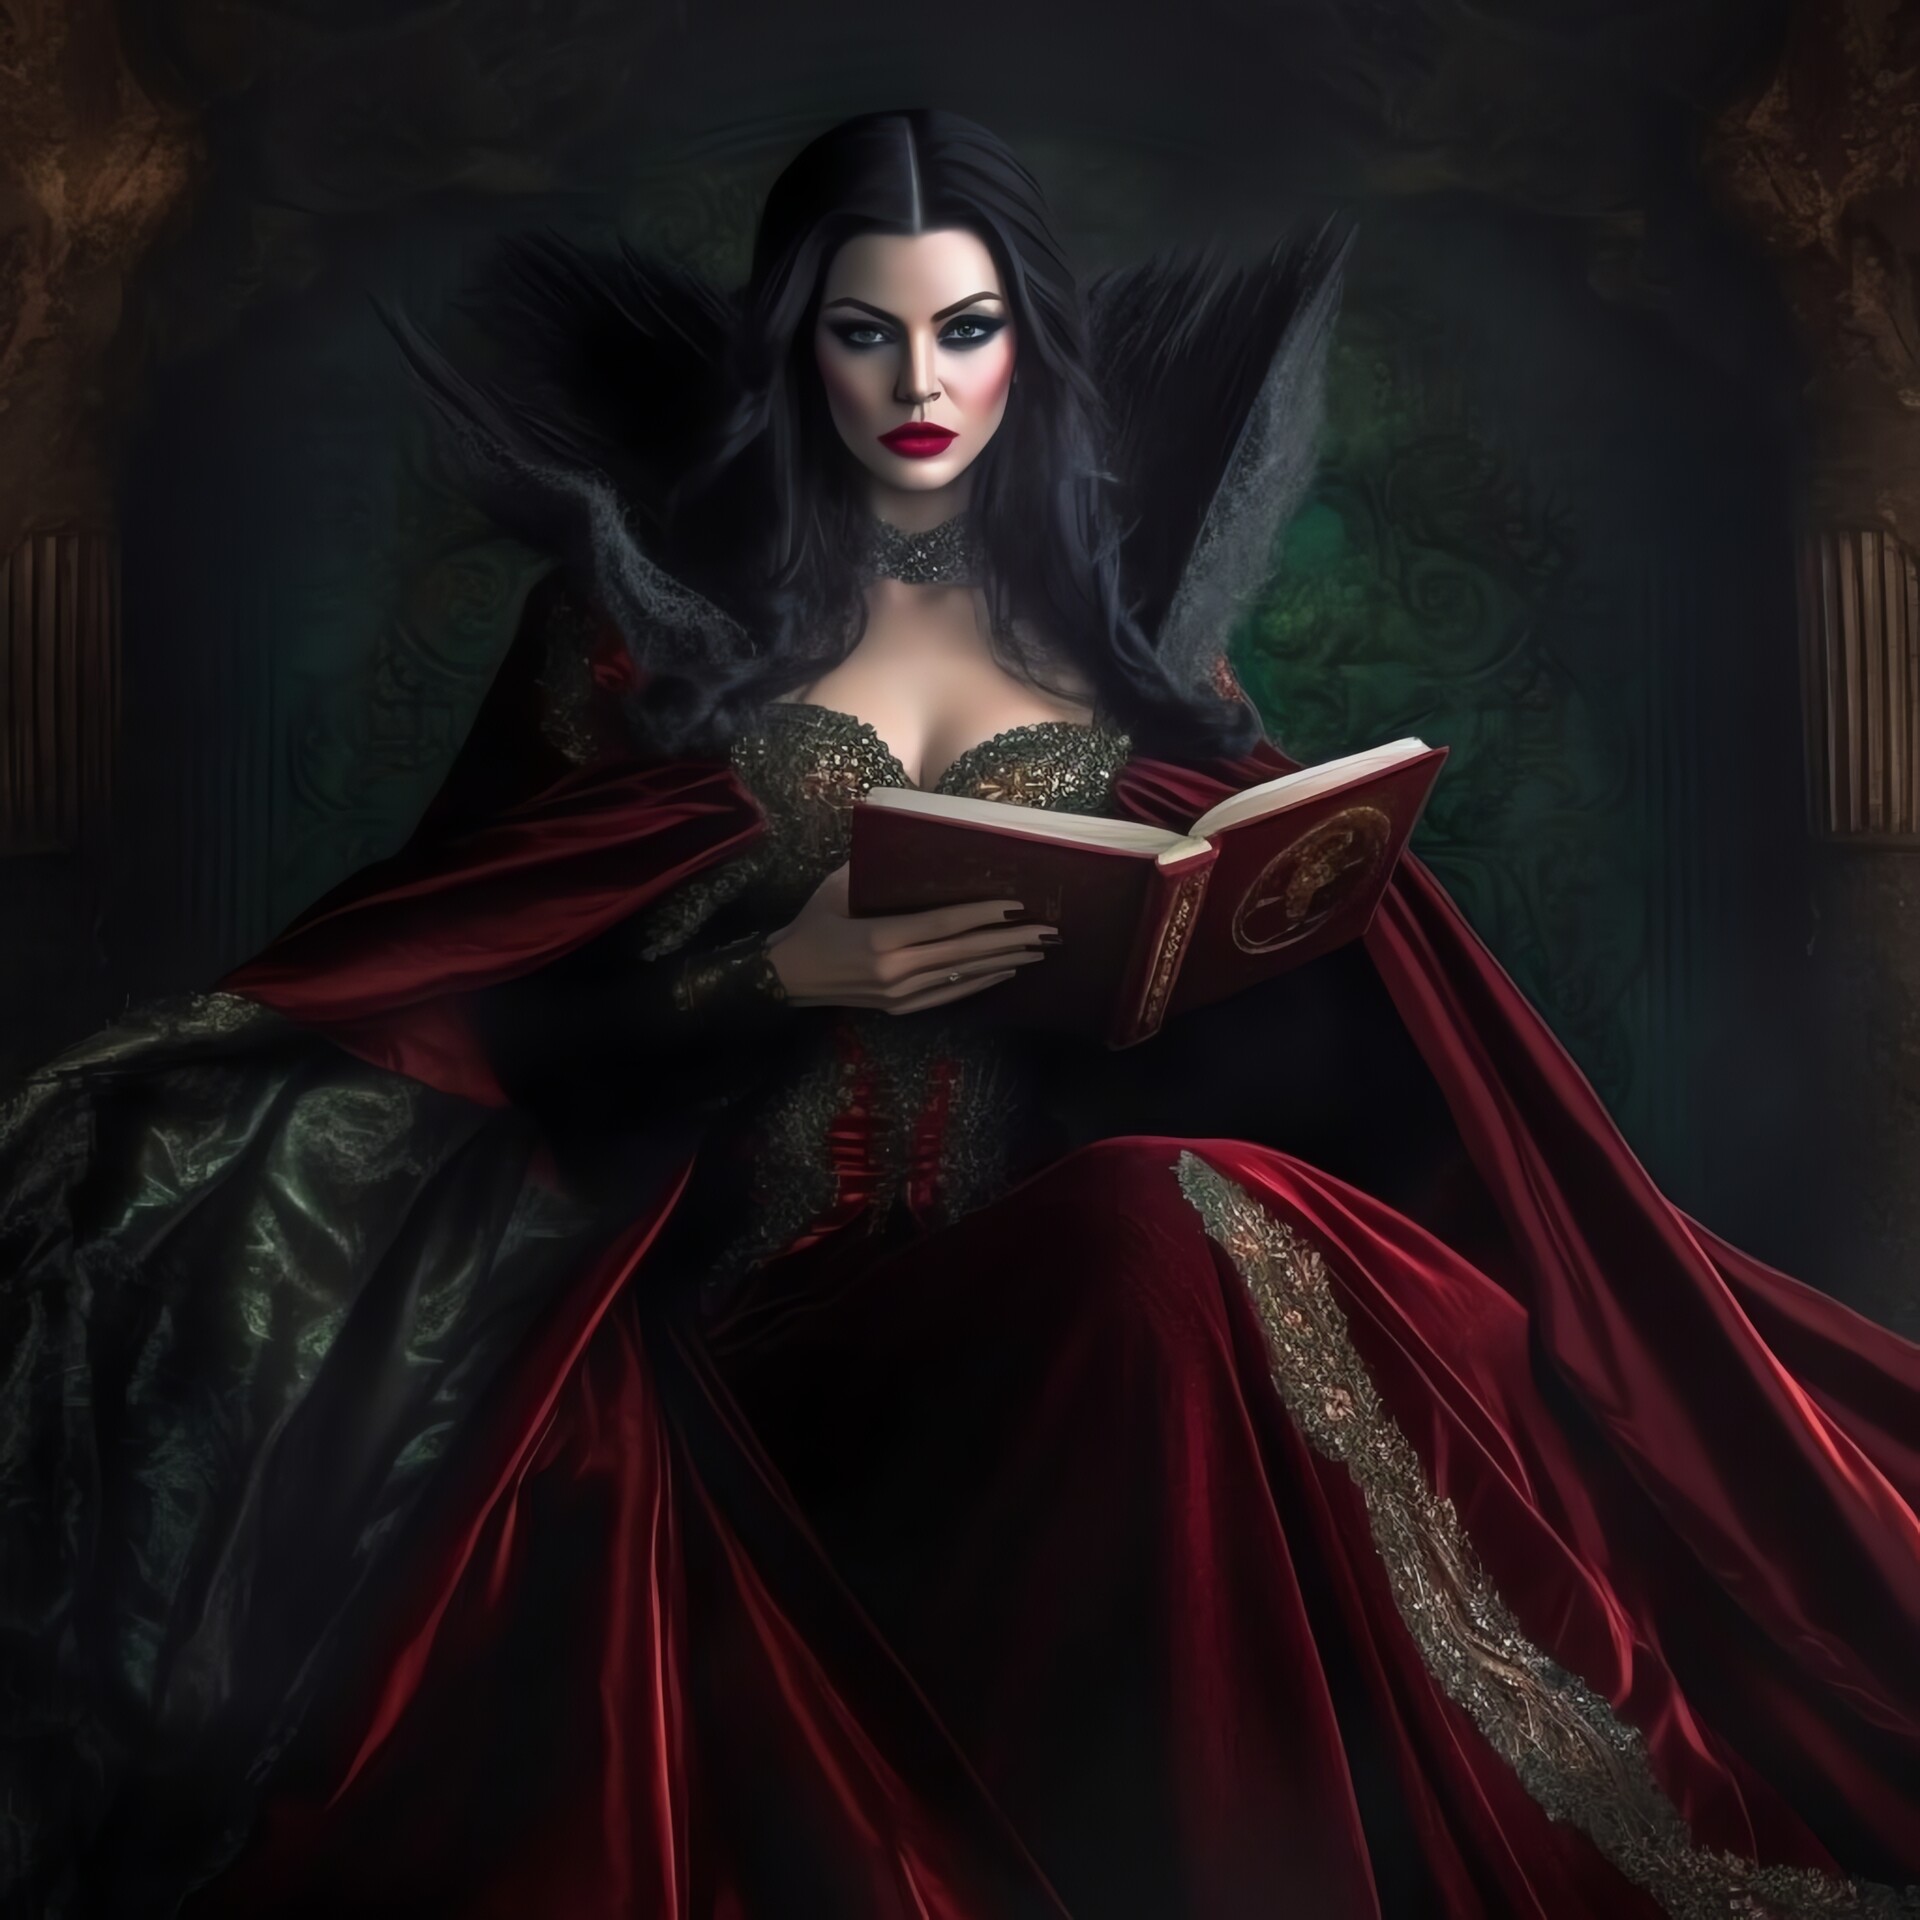 ArtStation - Vampire Queen - I